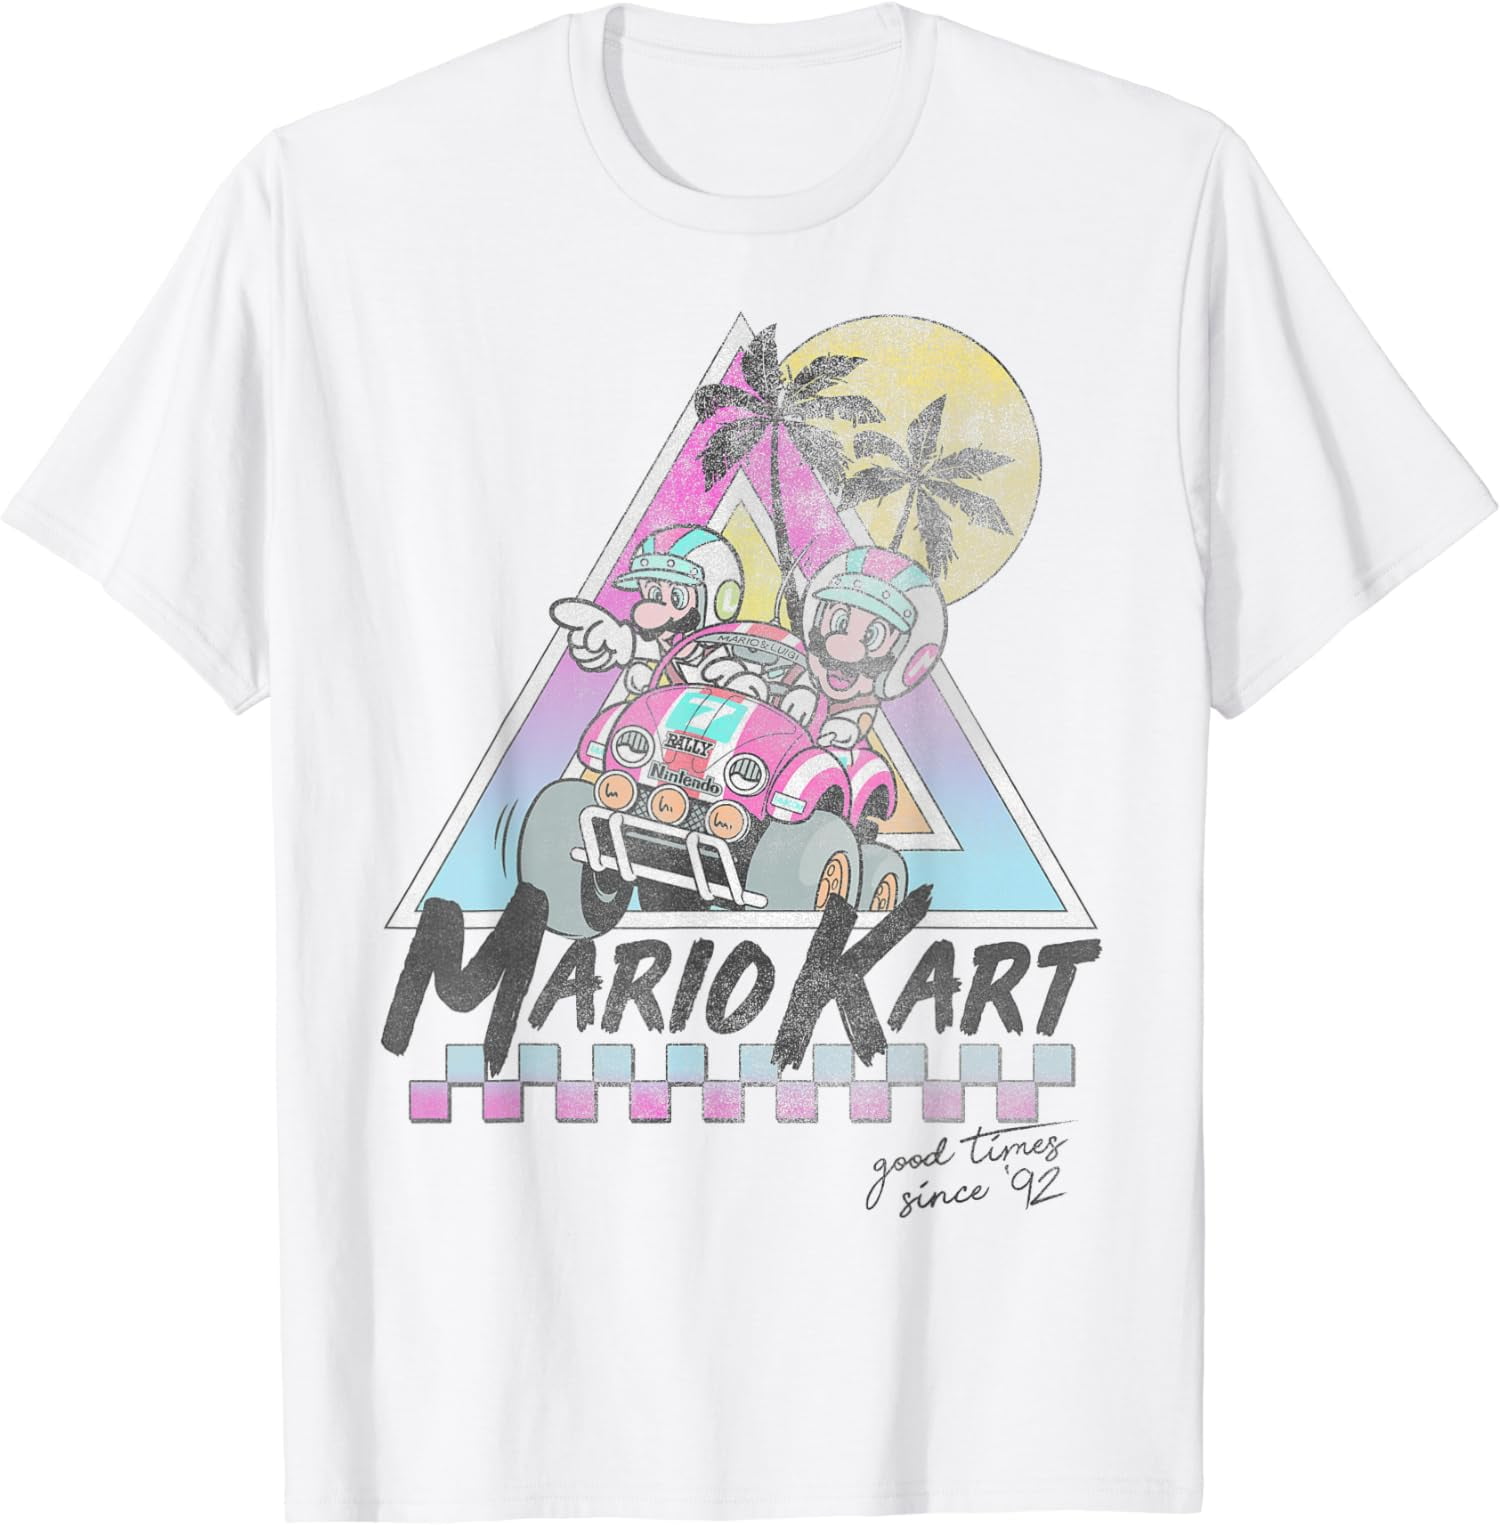 Mario Kart Mario And Luigi Good Time Since 92 Vintage T Shirt Walmart Com